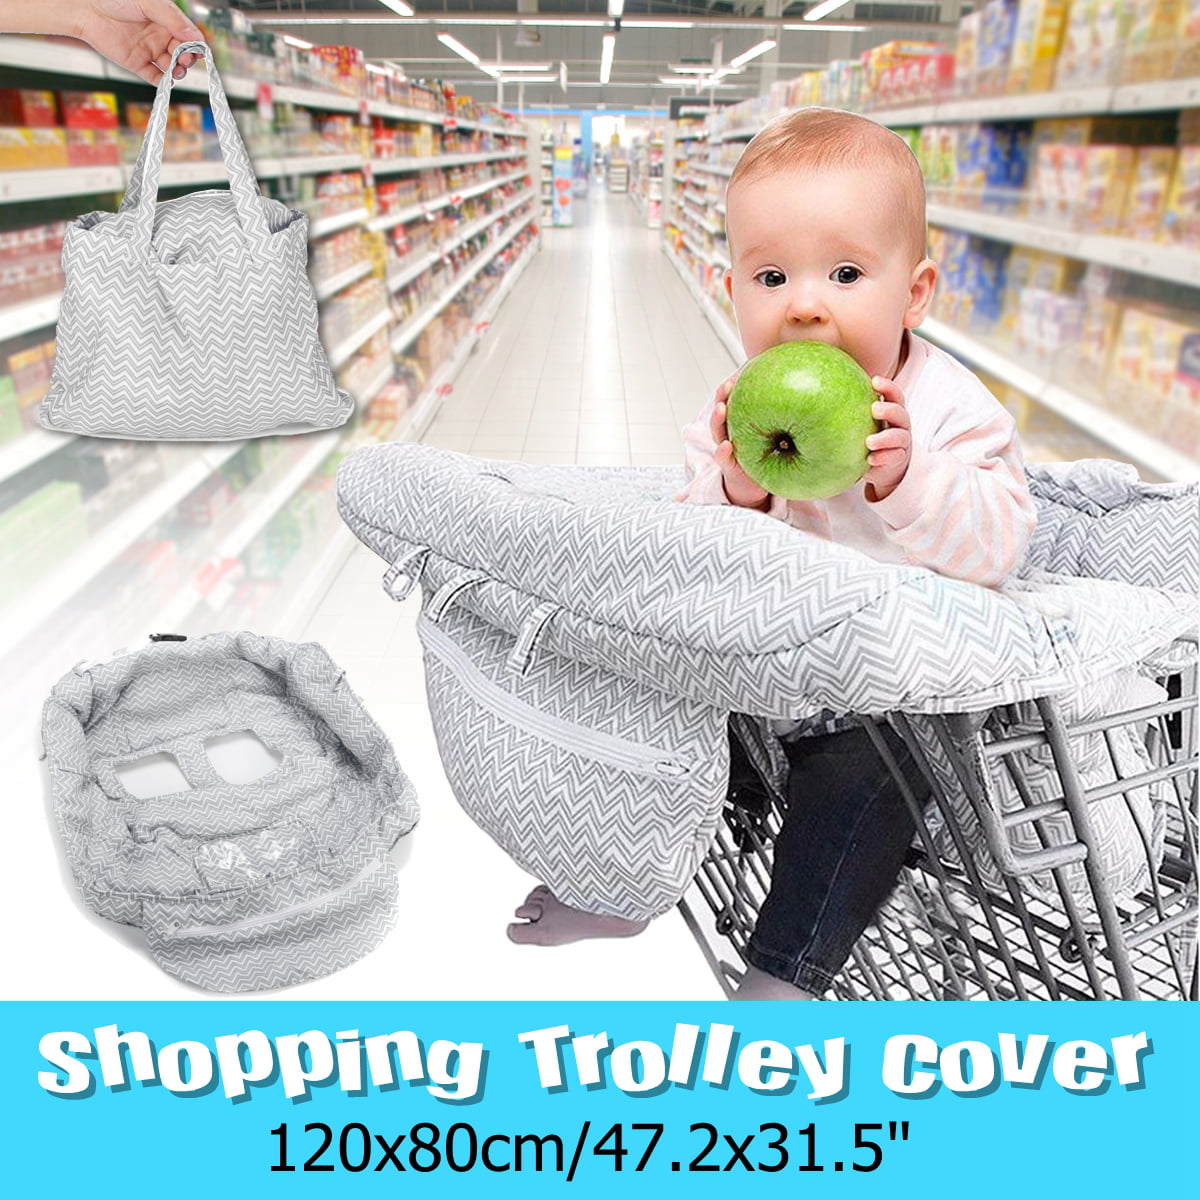 Portable Design 2-in-1 Baby Shopping Trolley Cover Highchair Seat Cushion Grey Chevron 